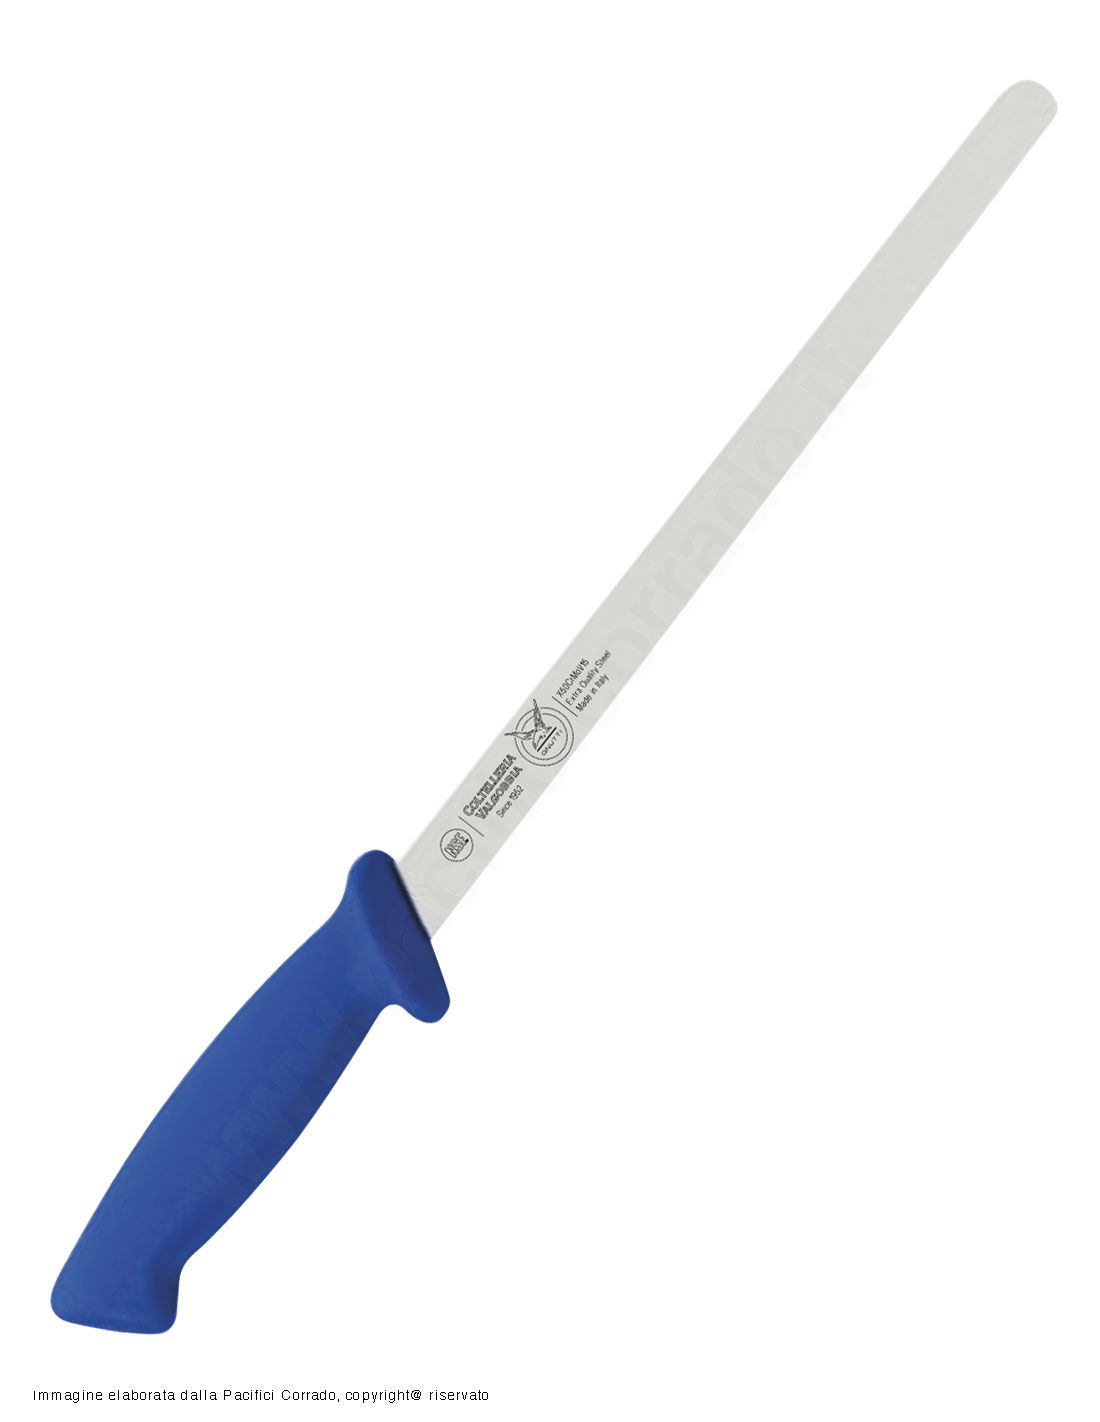 Valgobbia - coltellocm 28 prosciutto stretto valgobbia extraflessibile